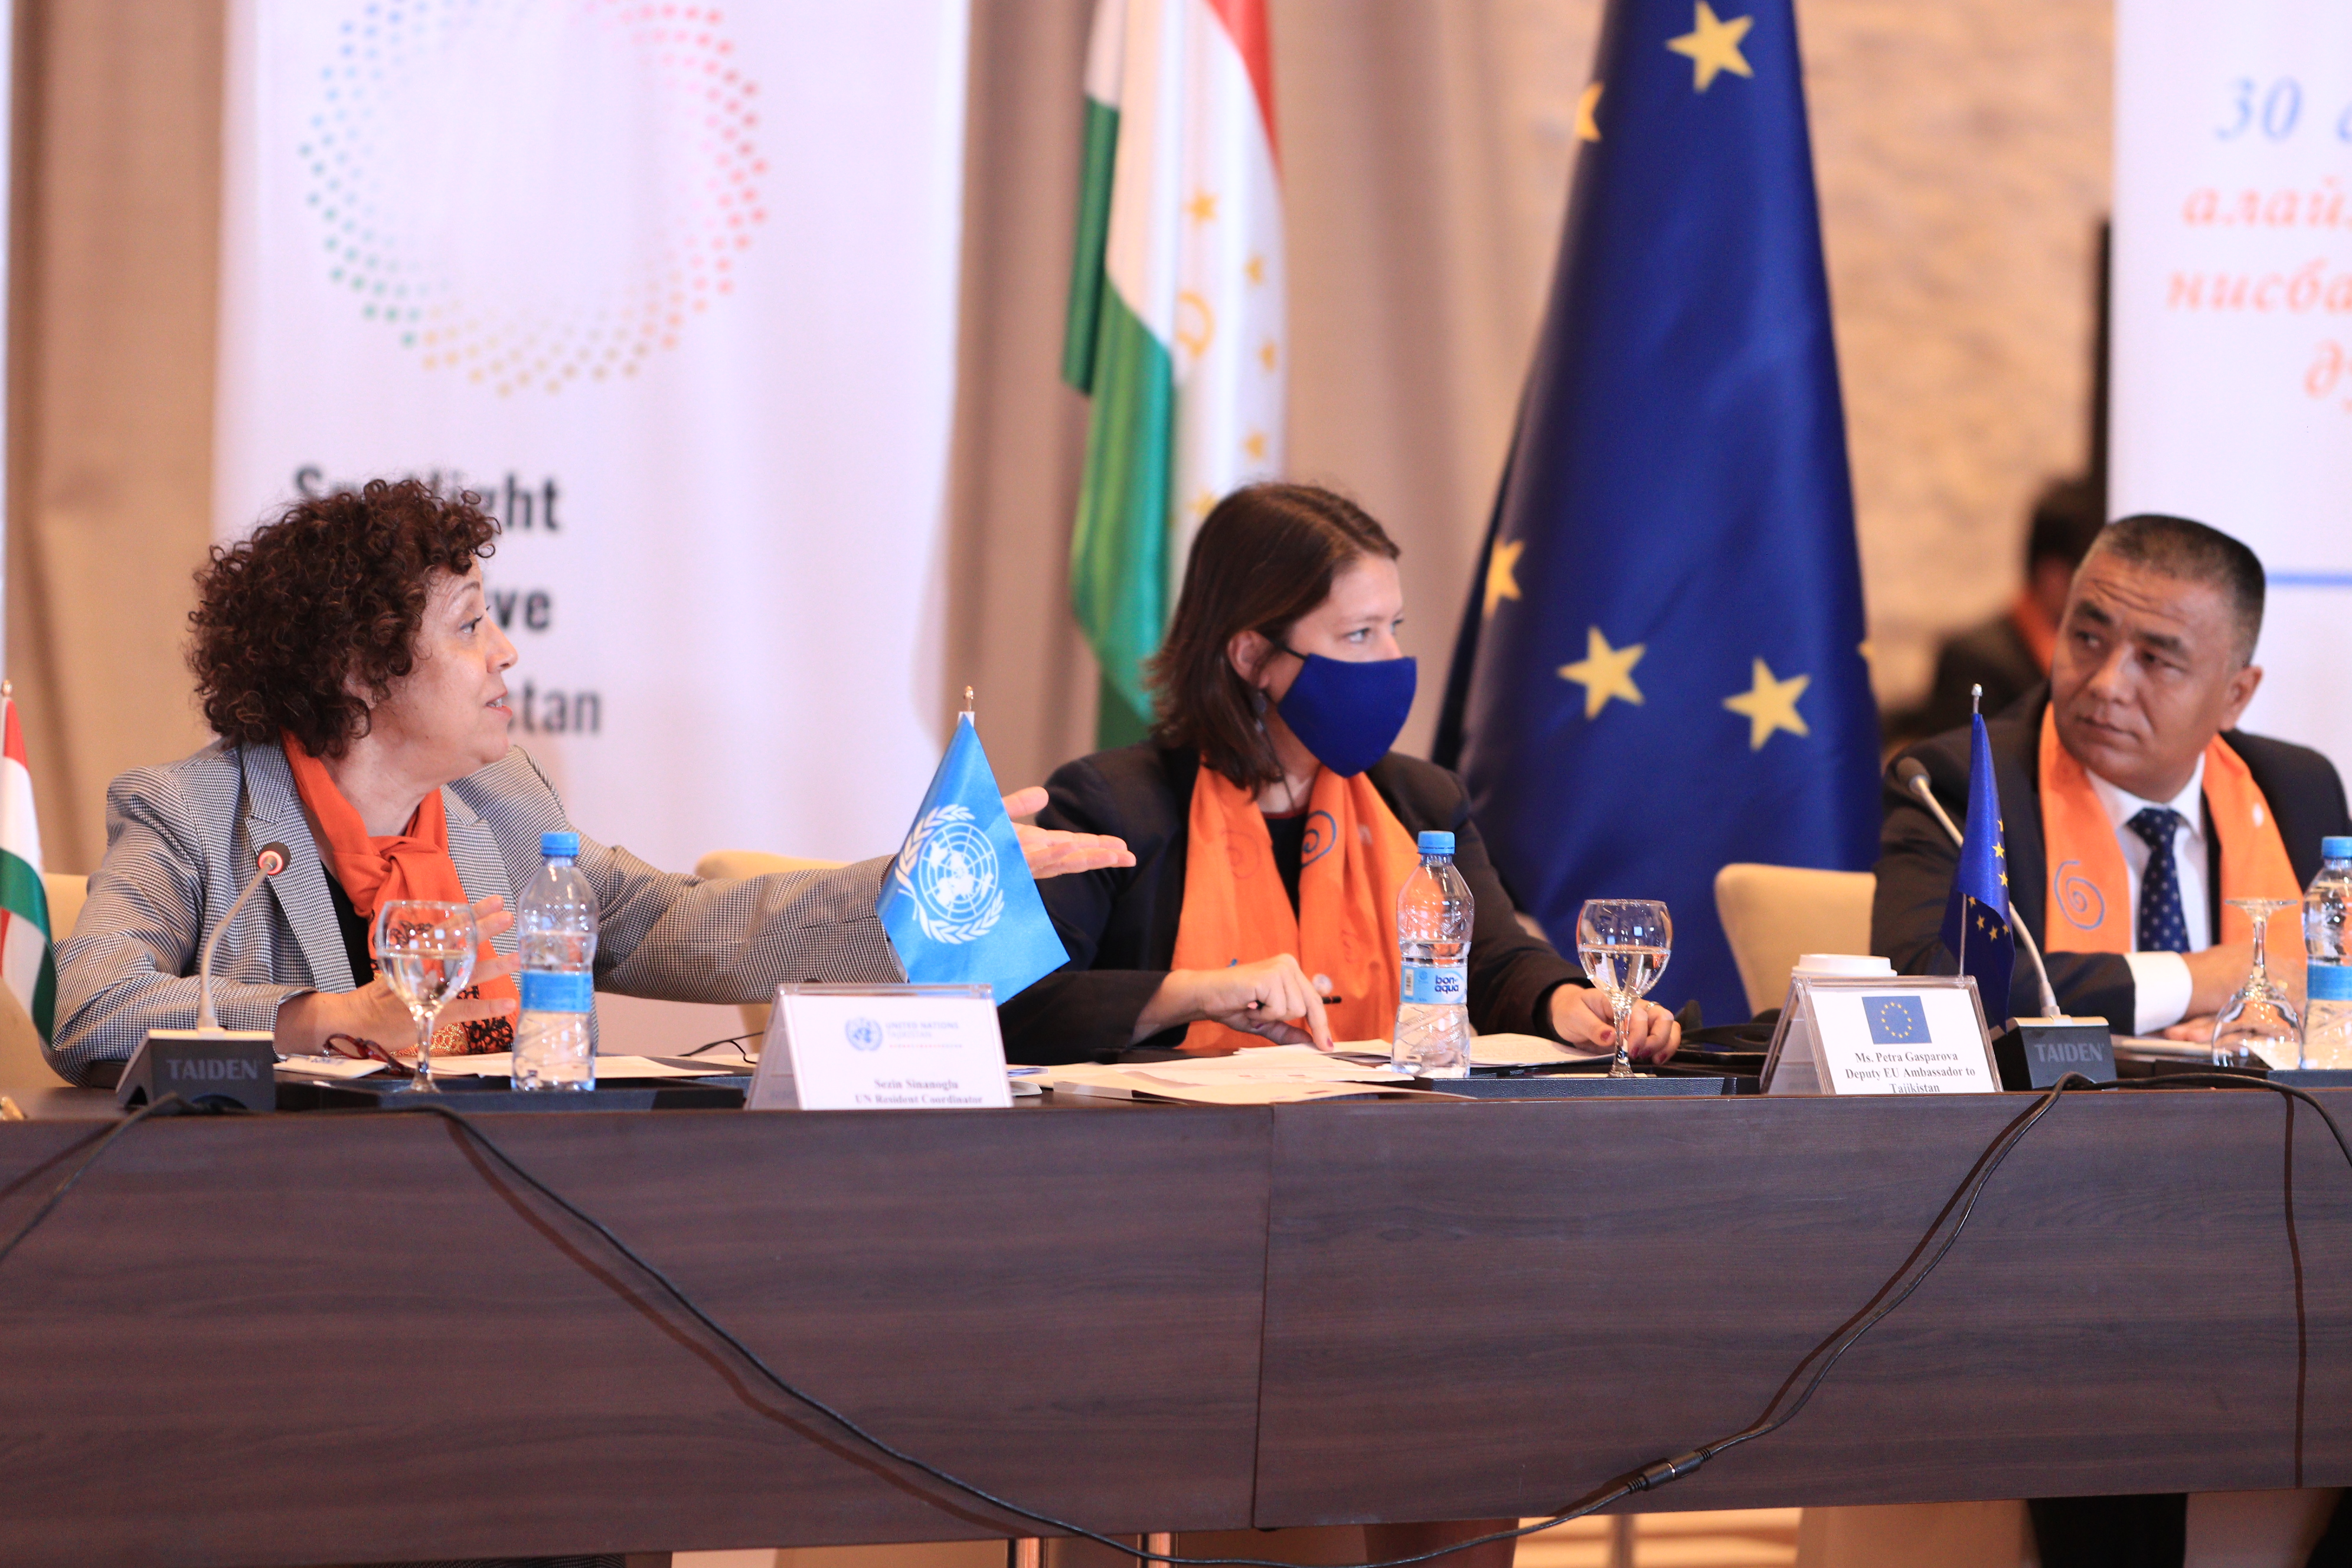 (From left to right) Ms. Sezin Sinanoglu, UN Resident Coordinator; Petra Gasparova, Deputy Ambassador to the European Union in Tajikistan and Azimjon Saifiddinov, Chair of Civil Society Reference Group Spotlight. Photo: Spotlight Initiative in Tajikistan 